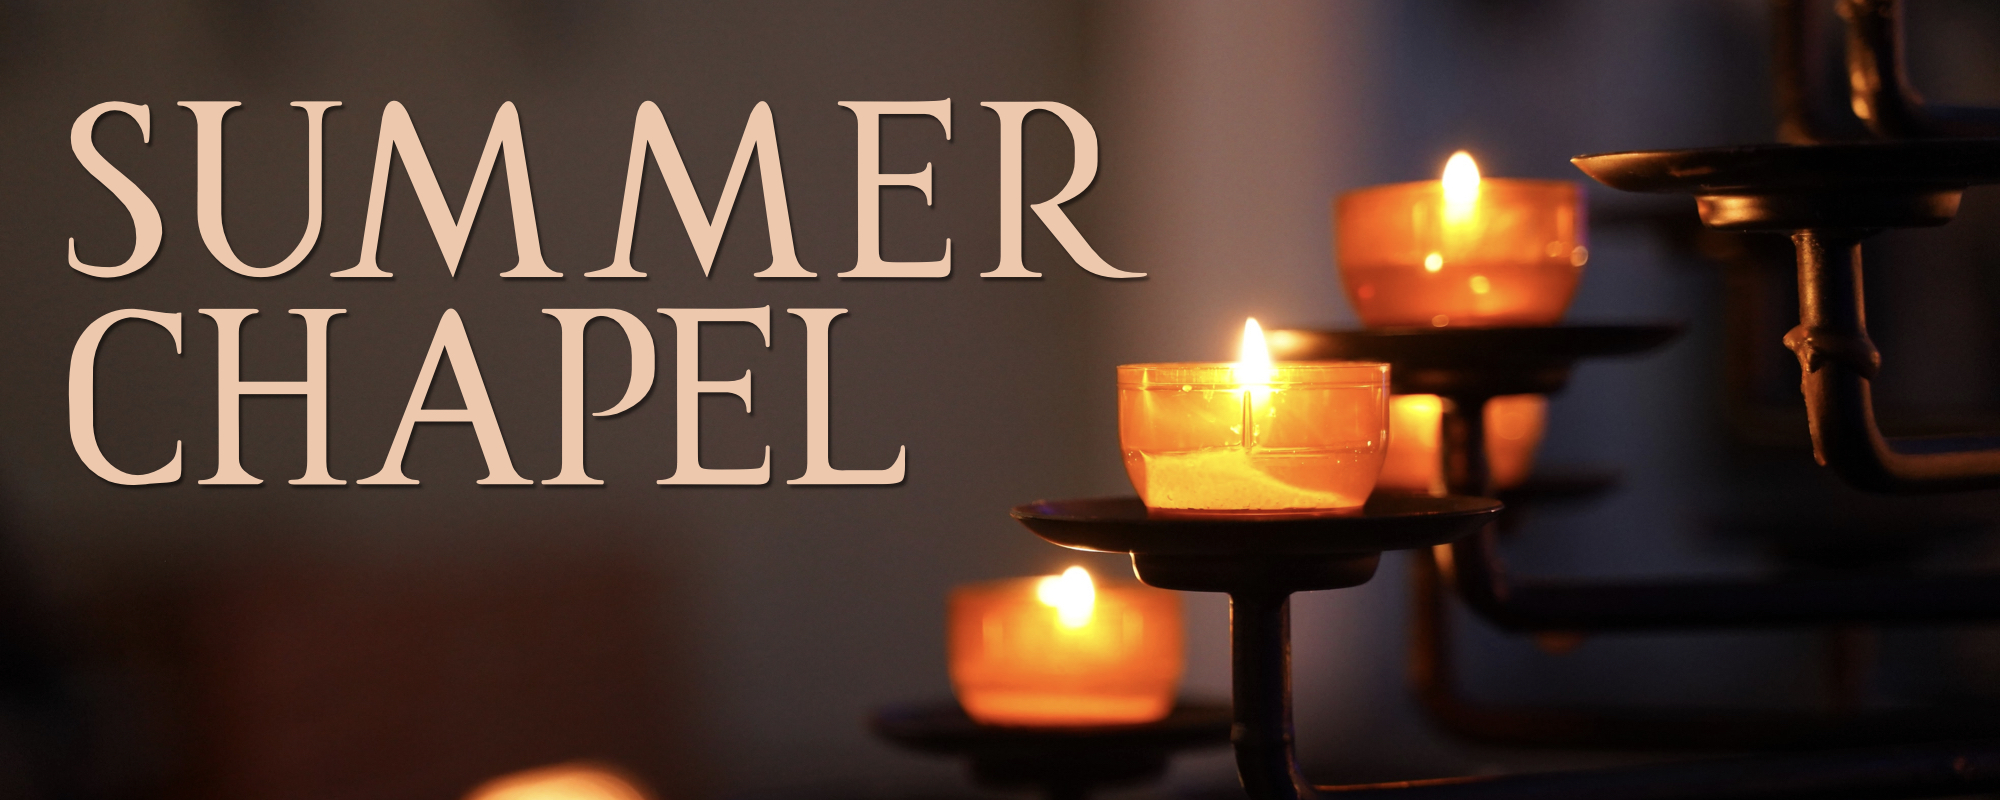 Summer Chapel Order of Worship June 11th